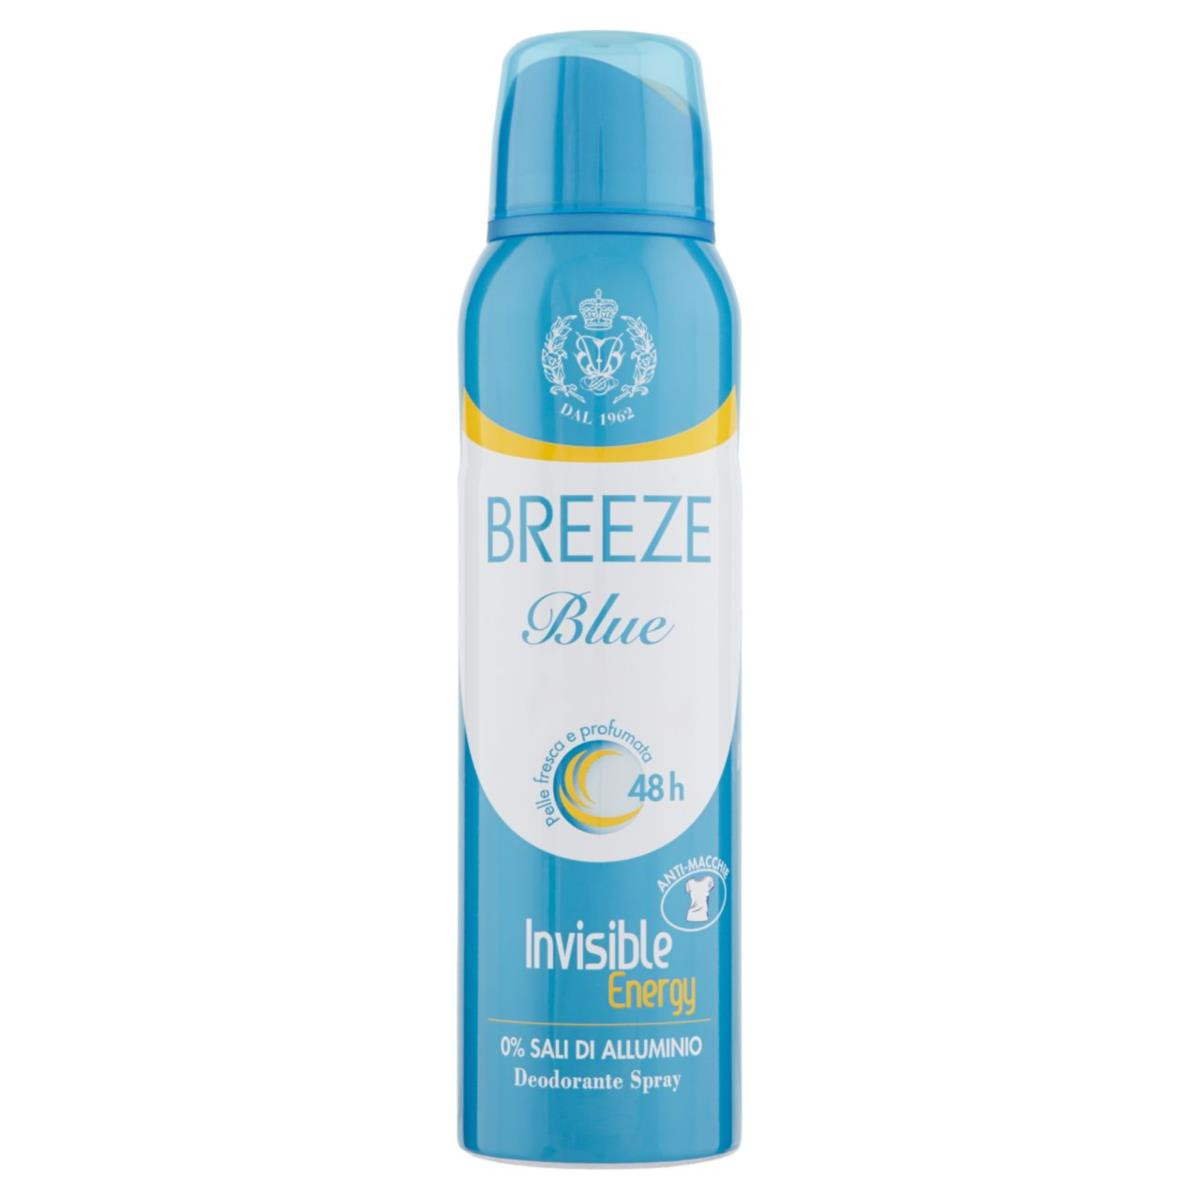 Image of Breeze Blue invisible - Deodorante Spray 48h 150 ml 8003510030170